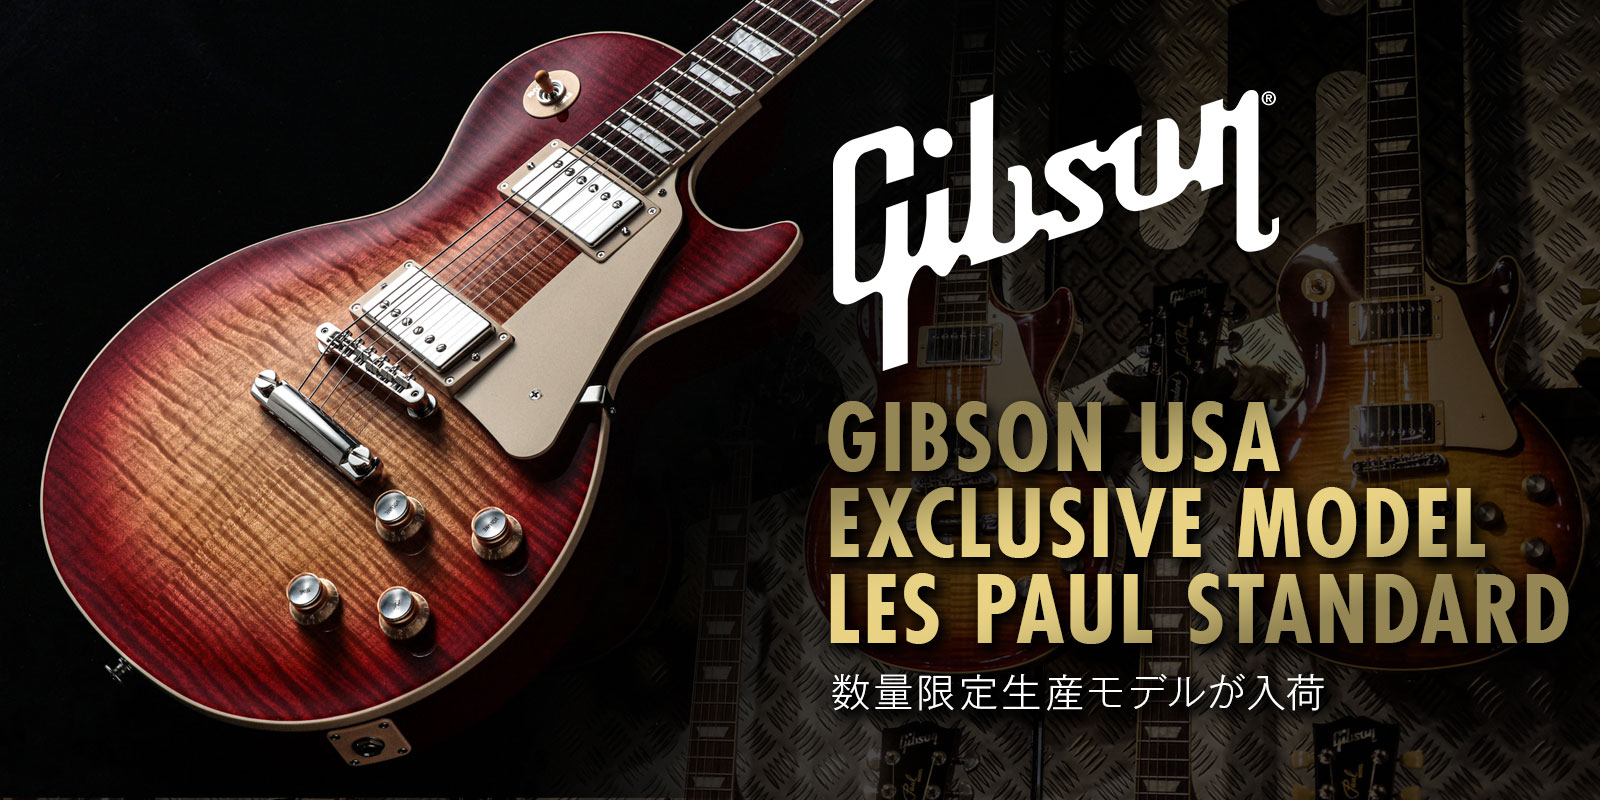 Gibson USA Exclusive Model Les Paul Standard 国内数量限定モデル